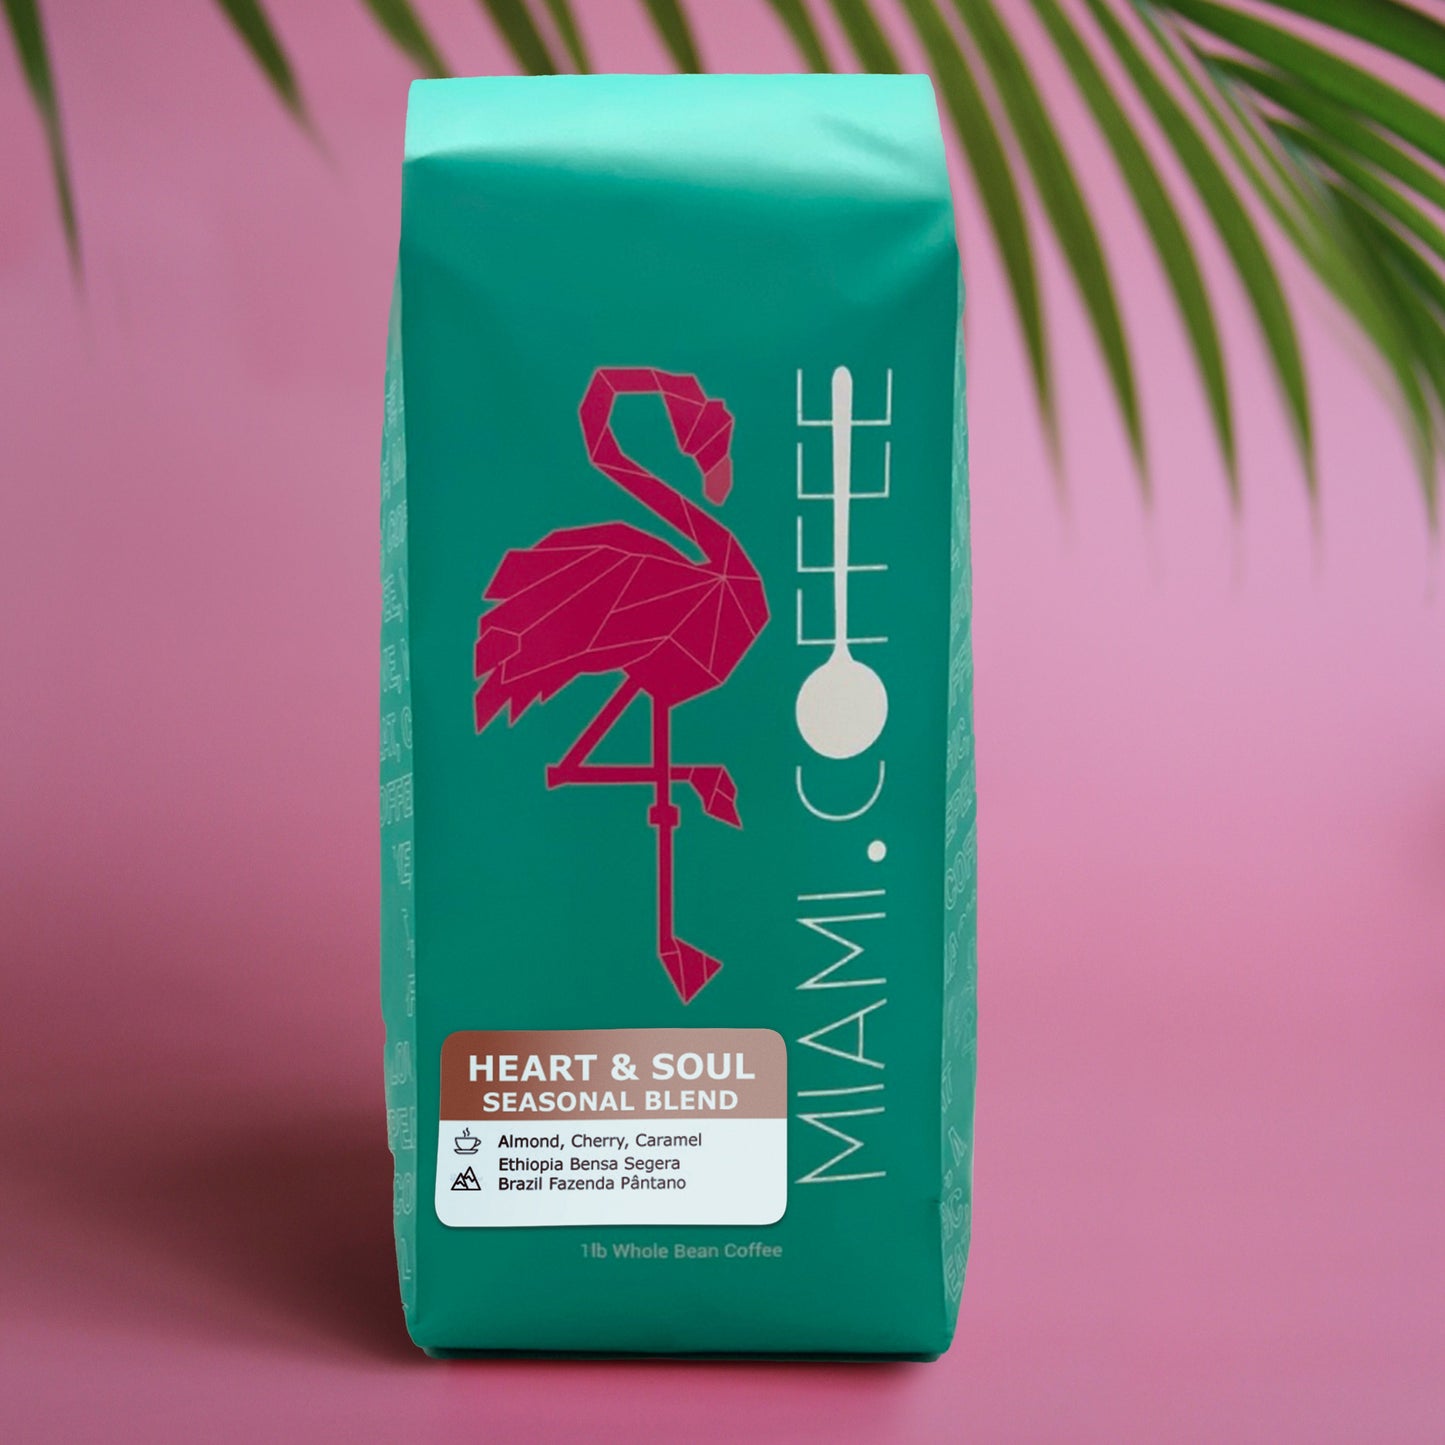 Miami (punto) Coffee Heart & Soul Mezcla de temporada, bolsa de 16 oz. Orígenes: Etiopía Bensa Segera y Brasil Fazenda Pântano. Descriptores de sabor: almendra, cereza, caramelo